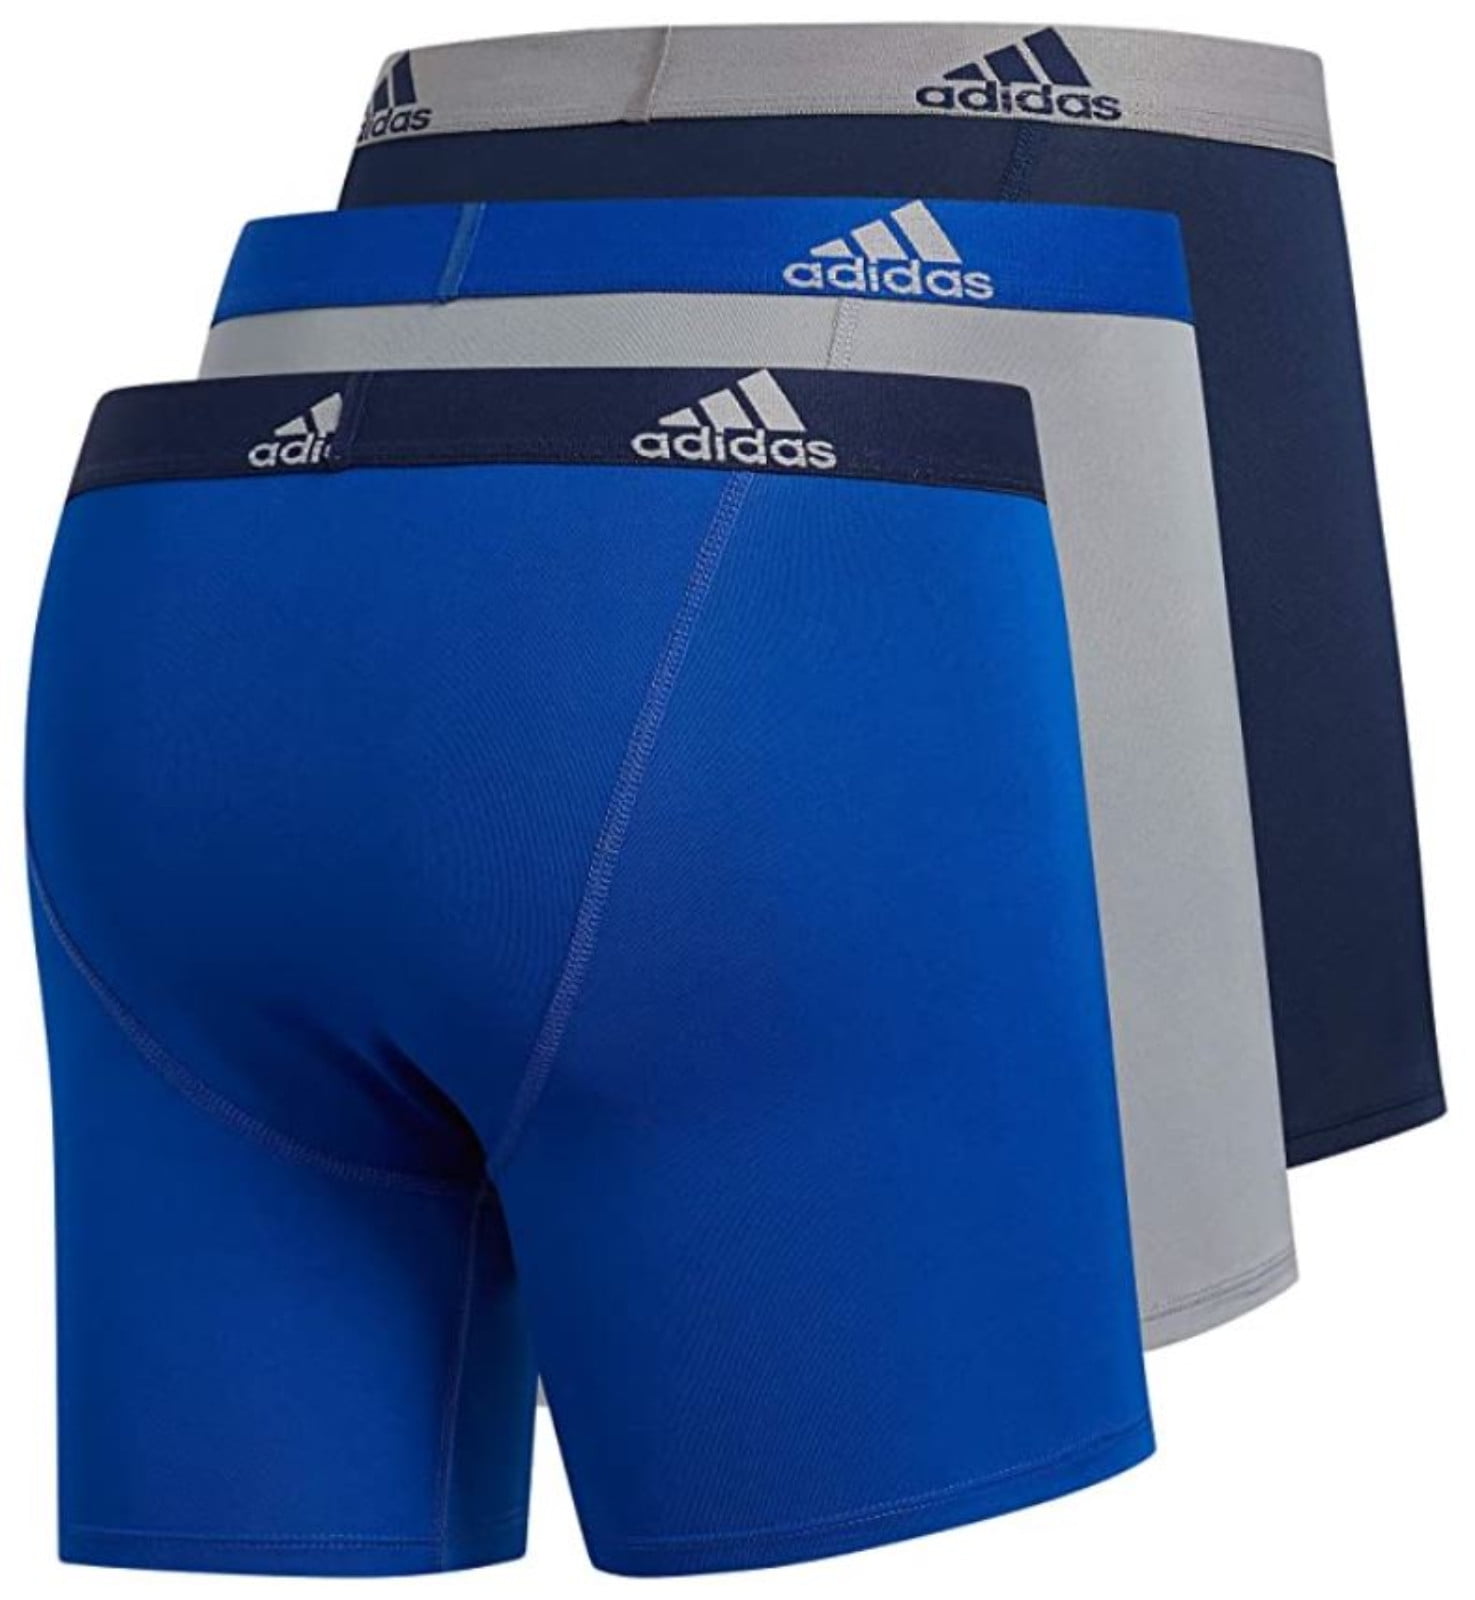 Adidas Men\'s Performance Boxer Brief Underwear (3-Pack) - Royal/Grey/Navy